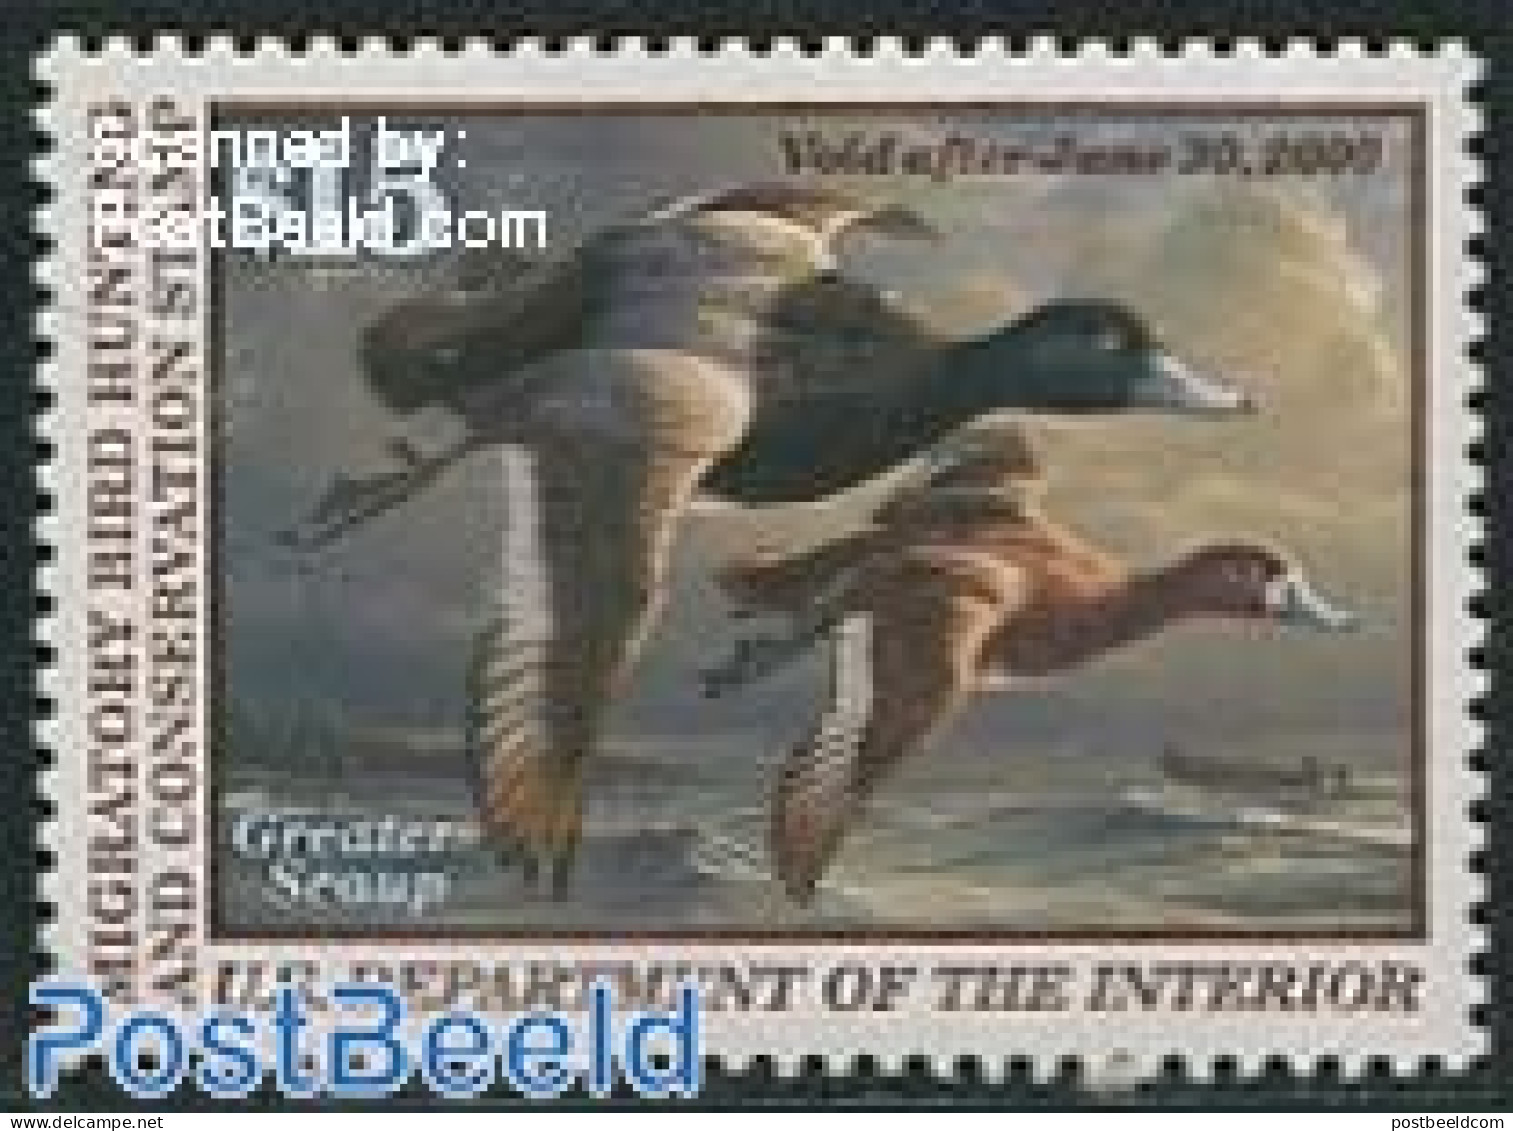 United States Of America 1999 Migratory Bird Hunting Stamp 1v, Greater Scaup, Mint NH, Nature - Birds - Ducks - Hunting - Ongebruikt